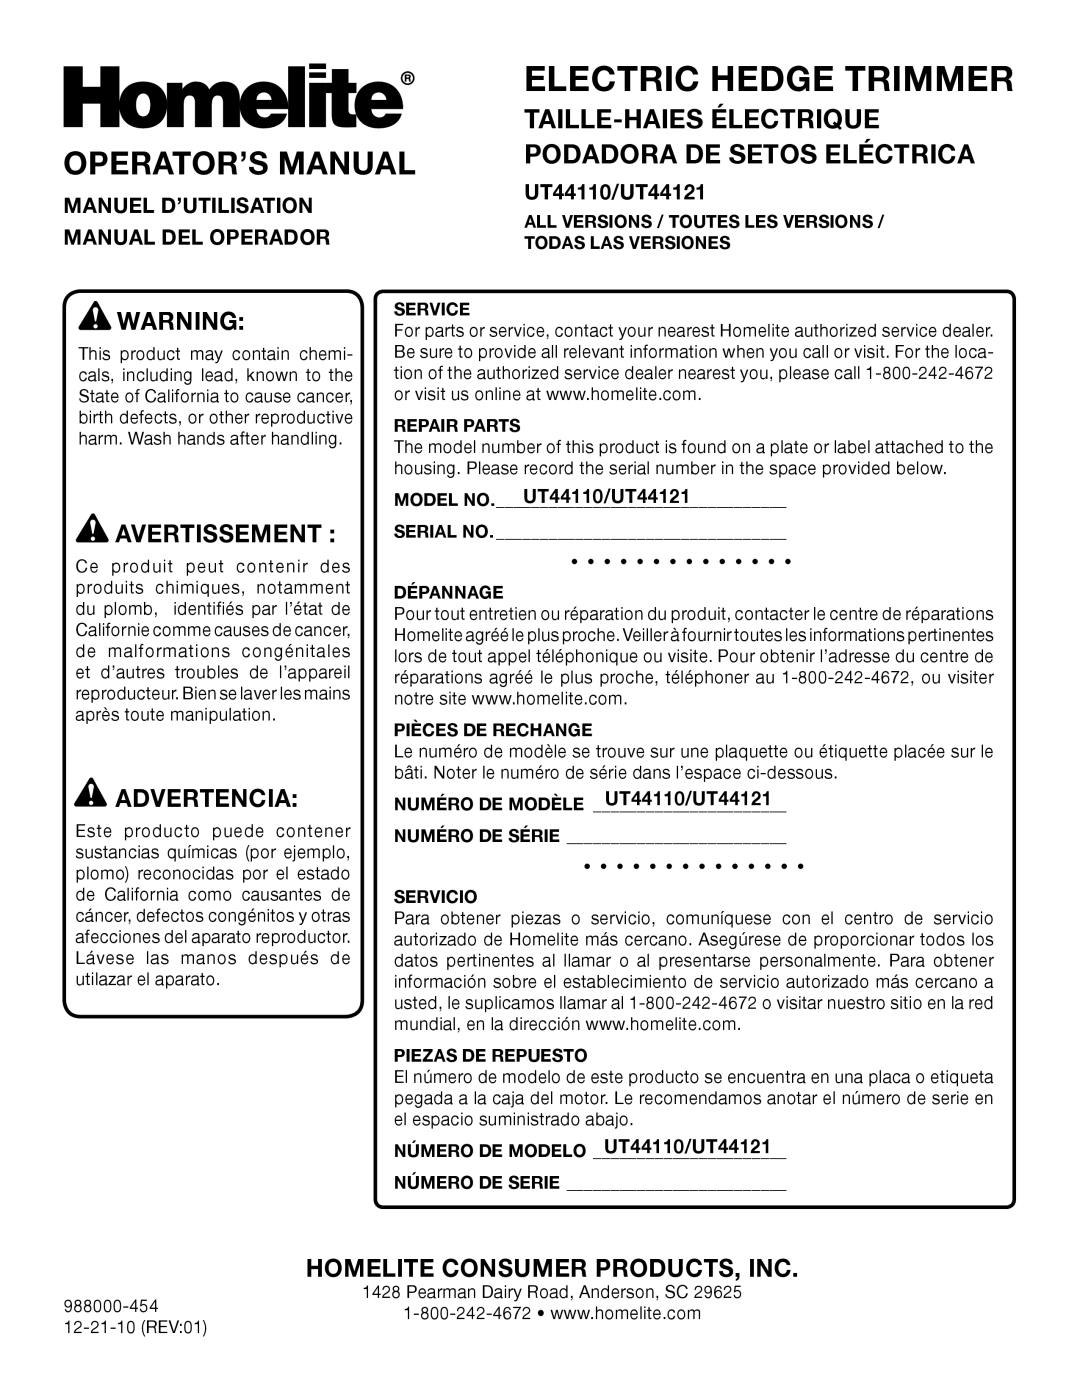 Homelite UT44121 Operator’S Manual, Avertissement , Advertencia, Homelite Consumer Products, Inc, Manuel D’Utilisation 